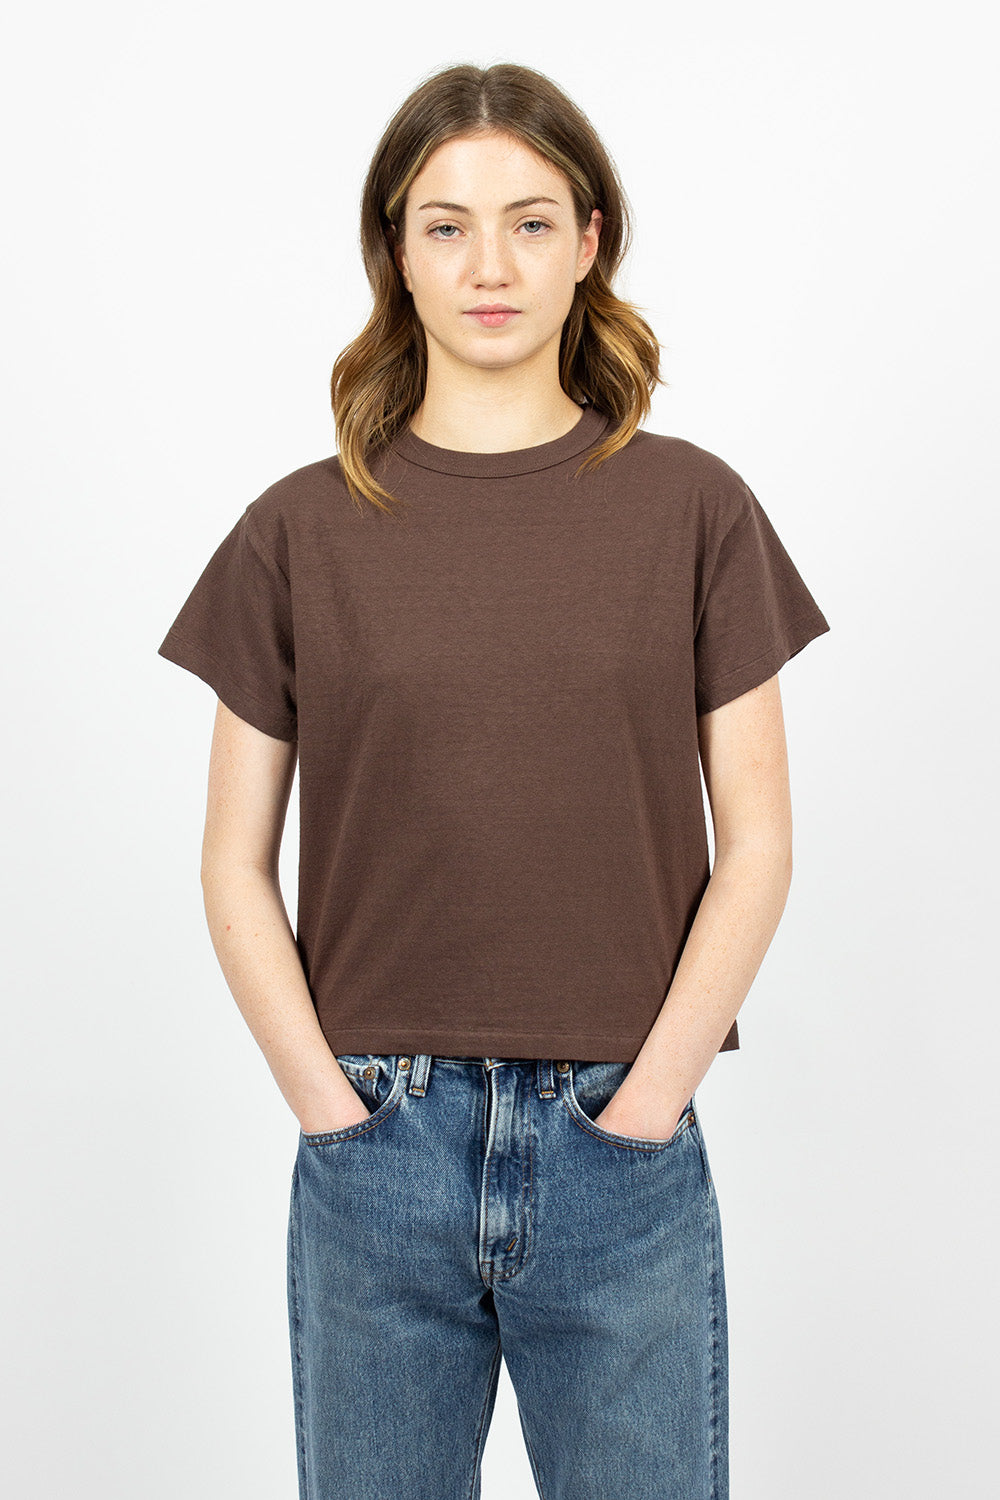 Na'Maka'Oh T-Shirt Seal Brown